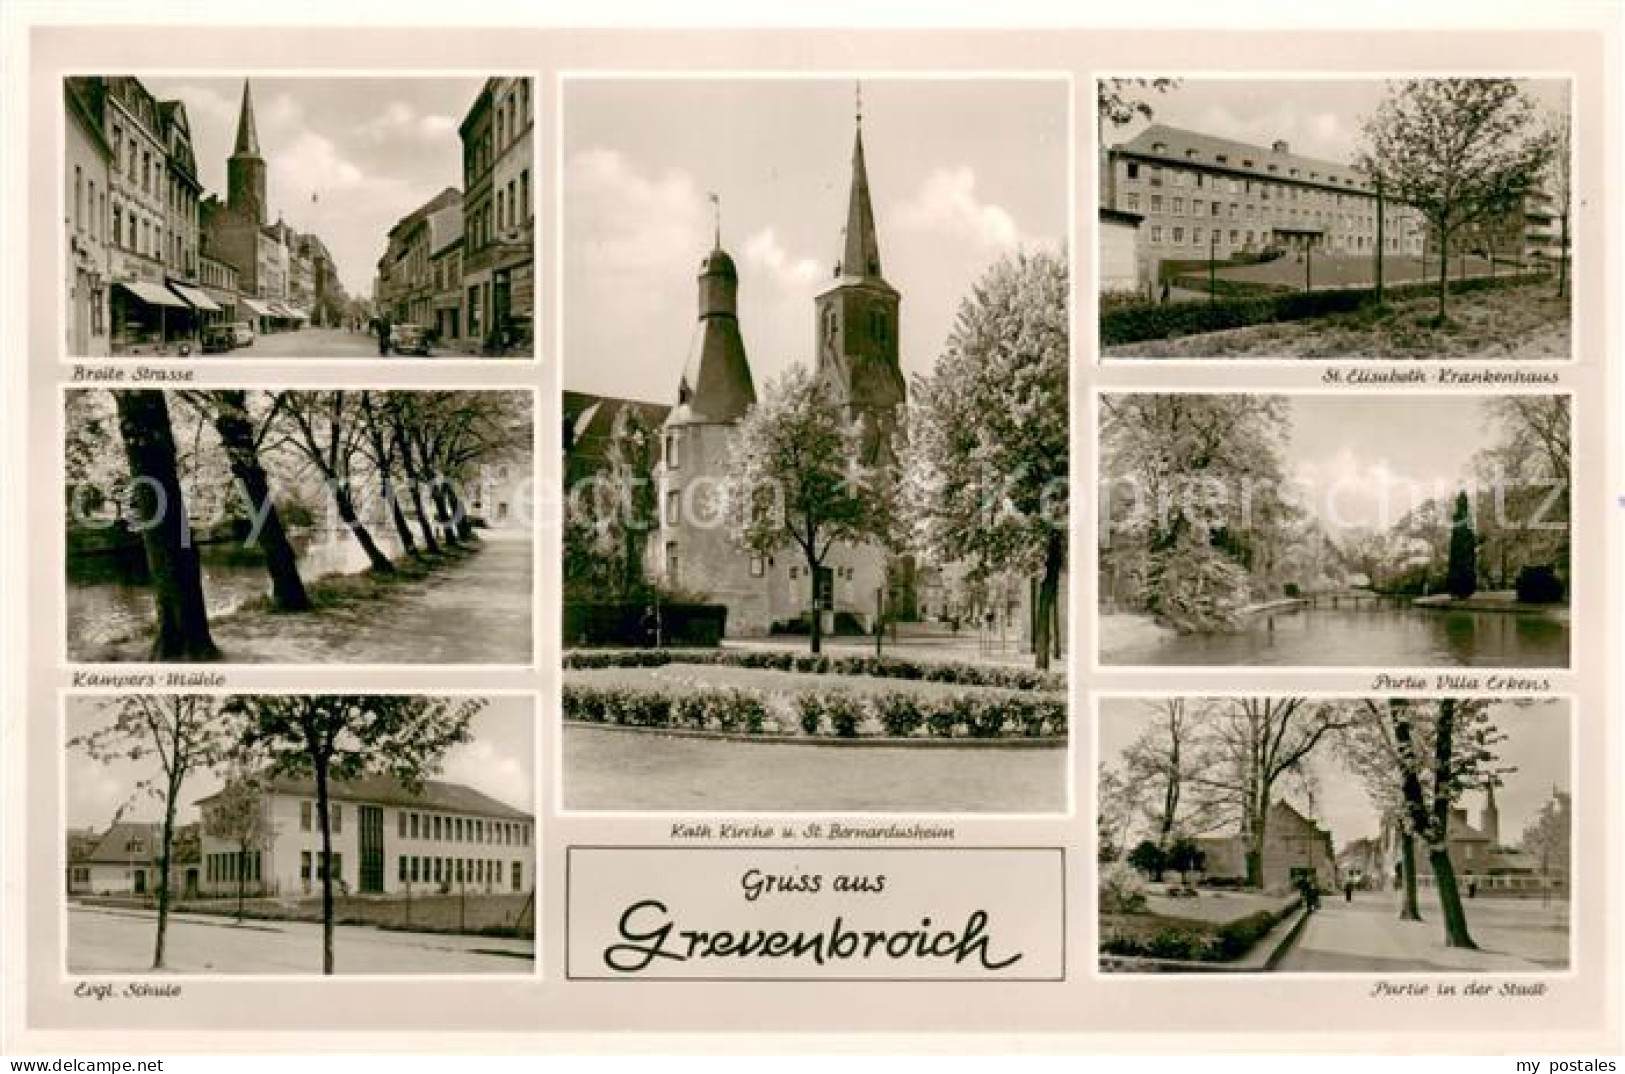 73671669 Grevenbroich Breite Strasse Ev Schule Kath Kirche St Bernardusheim St E - Grevenbroich